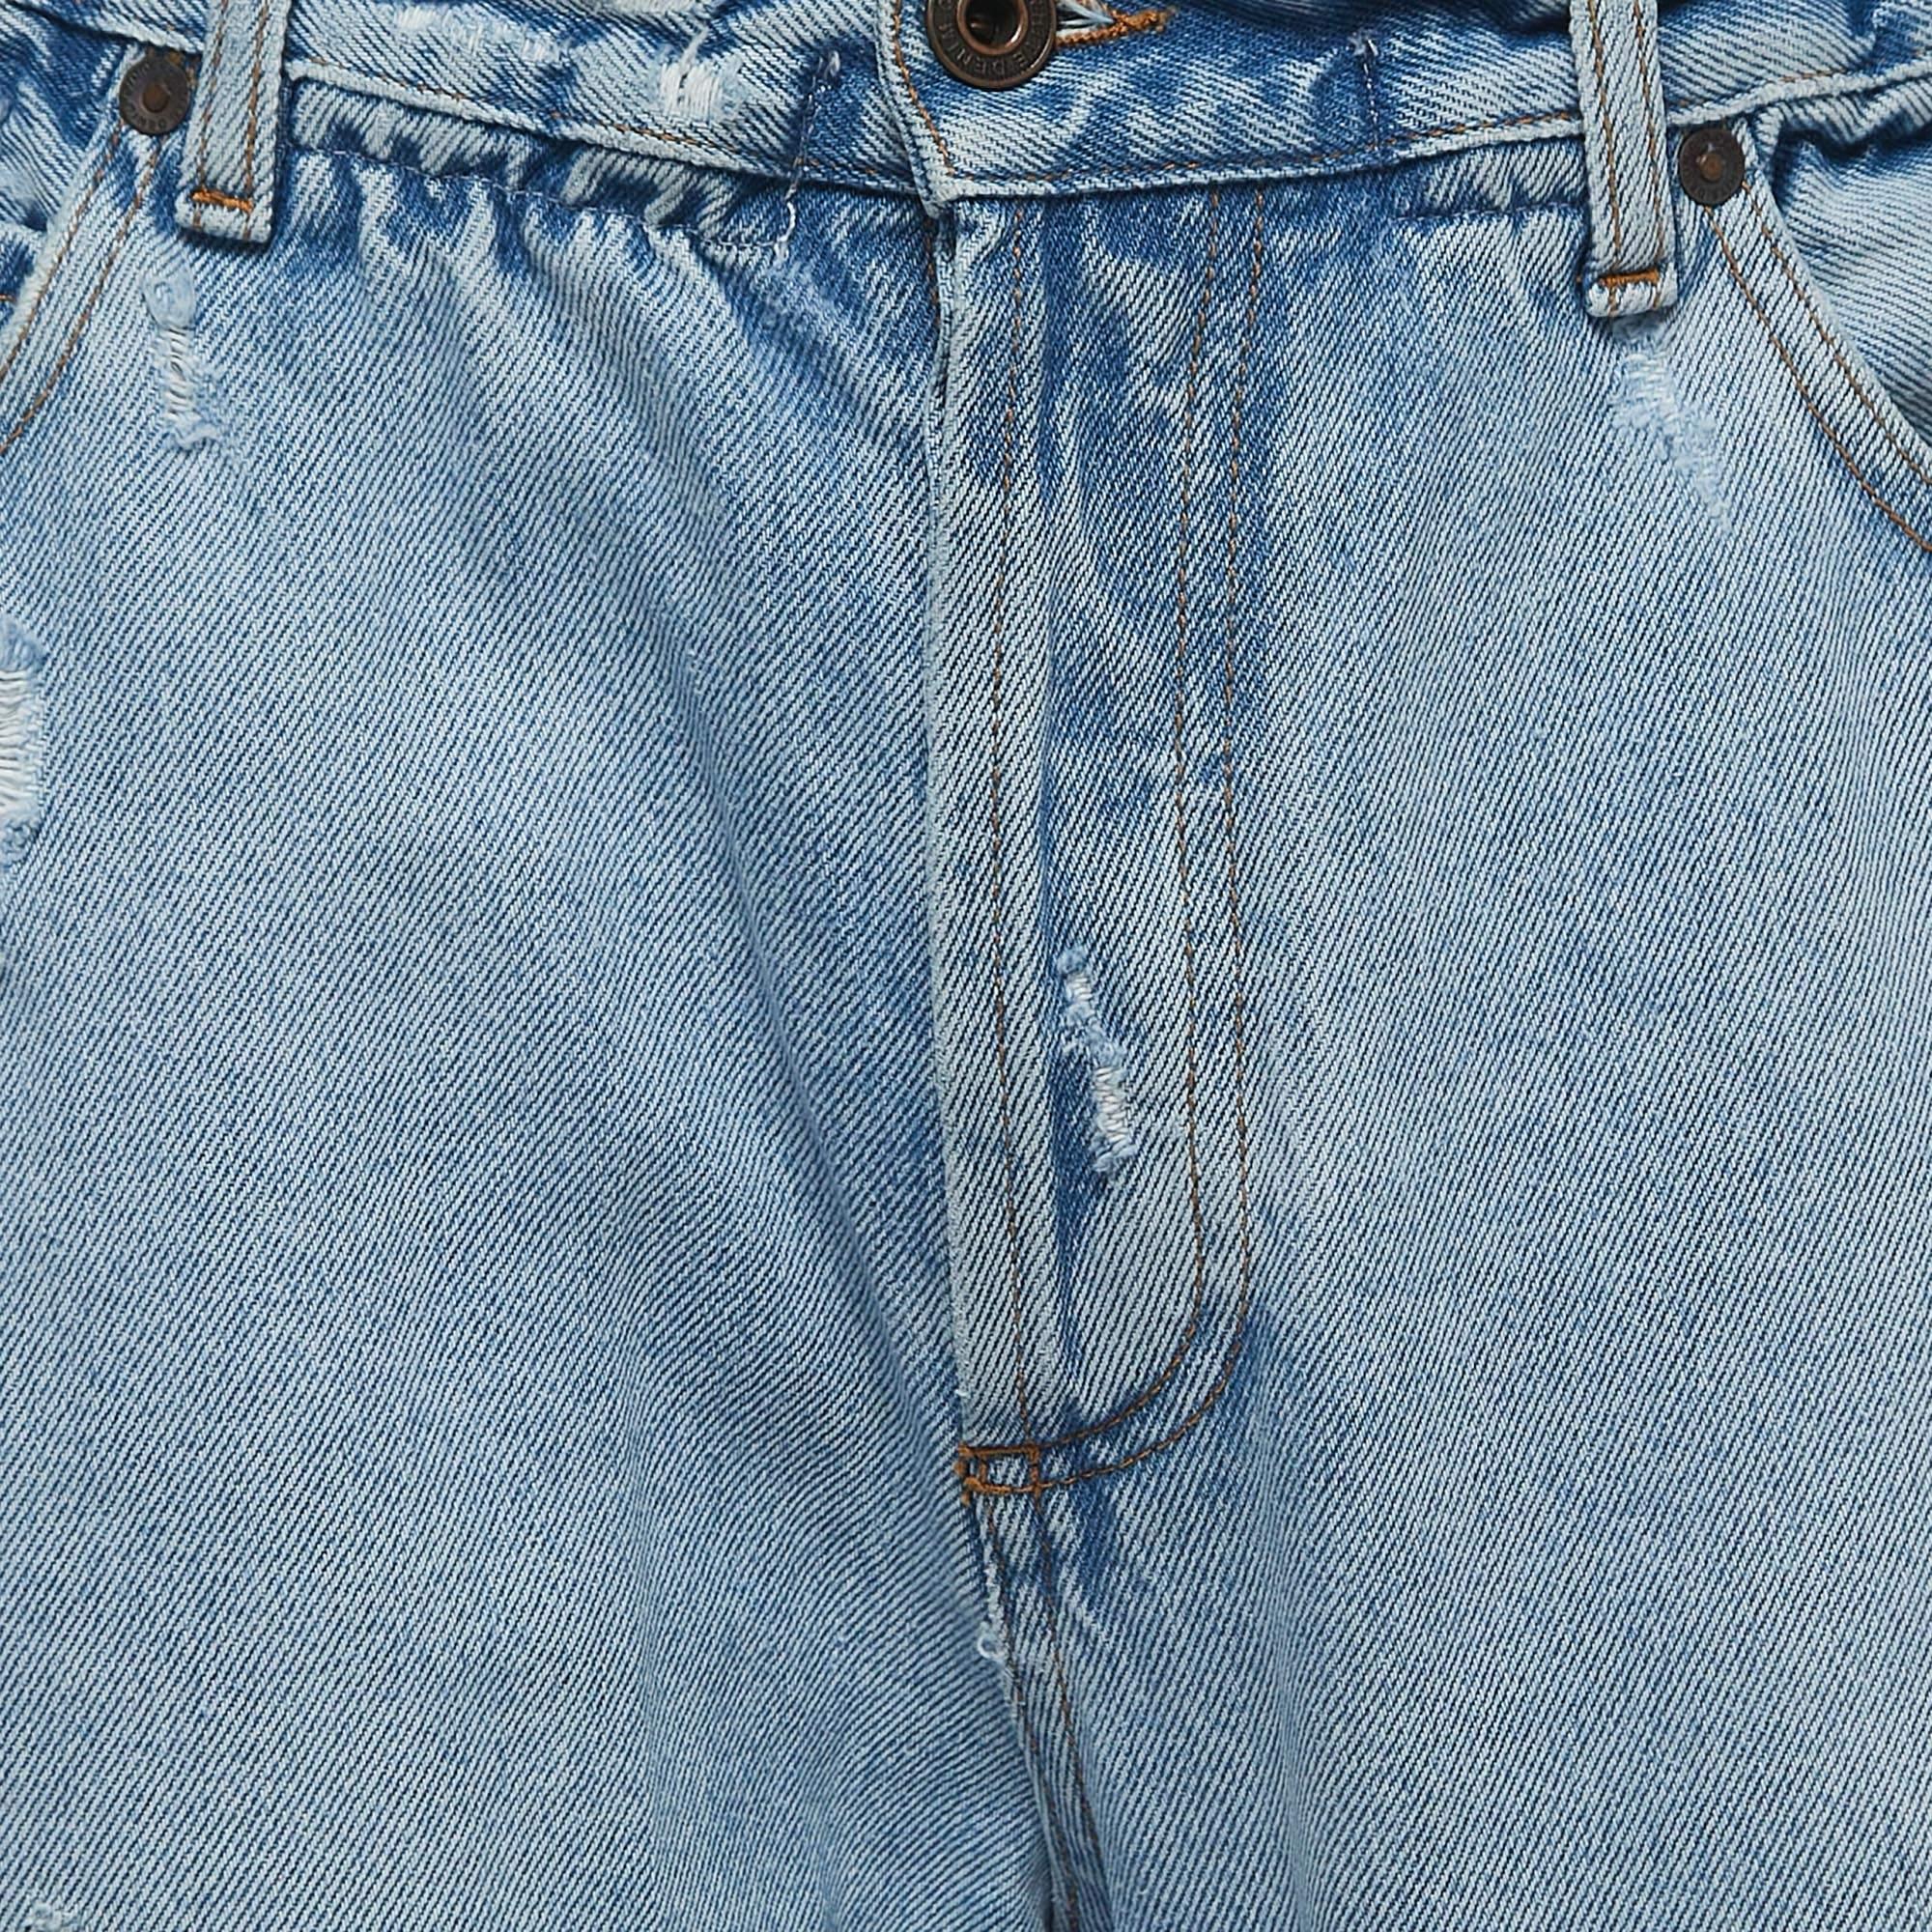 Off-White Light Blue Distressed Denim Buttoned Paperbag Waist Jeans M Waist 30